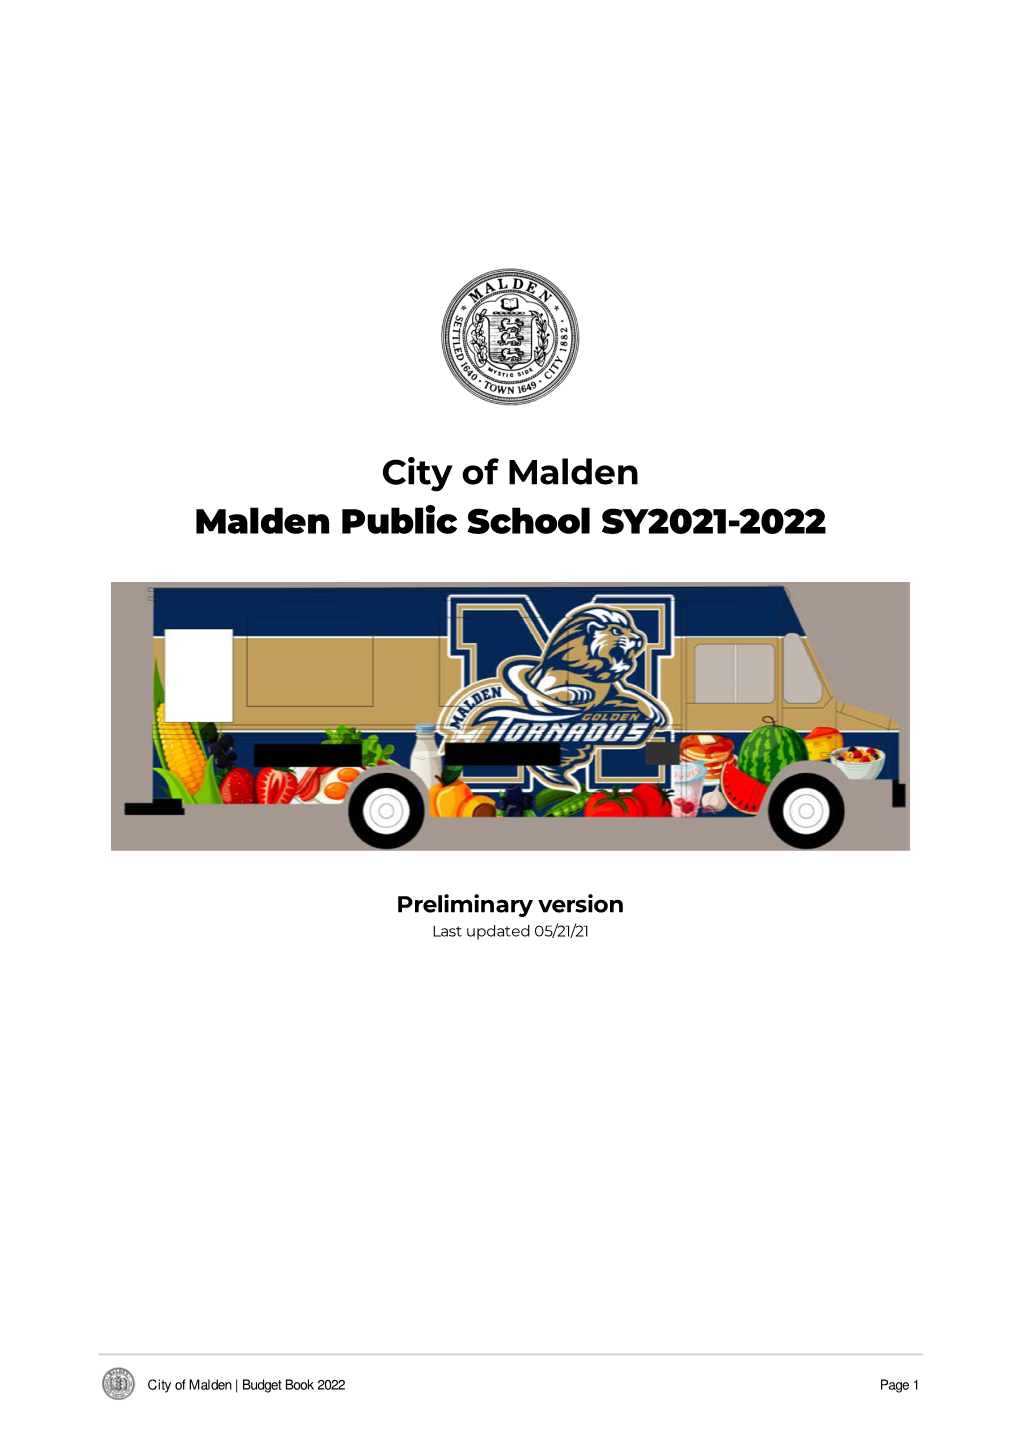 City of Malden Malden Public School SY2021-2022